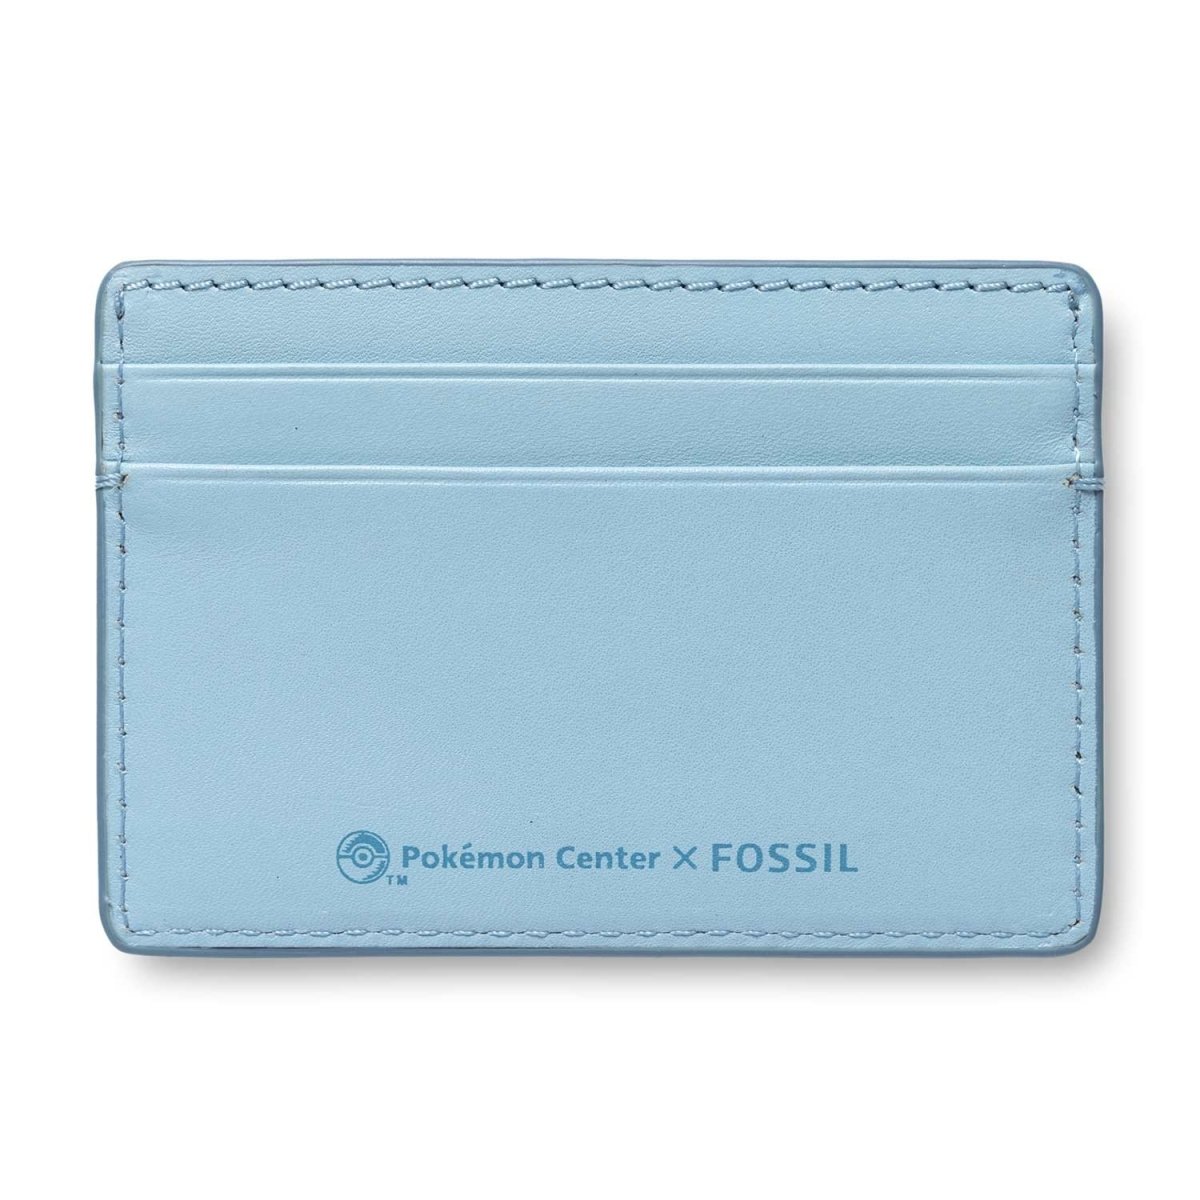 Pokémon Center × Fossil: Squirtle Blue Leather Steven Card Case